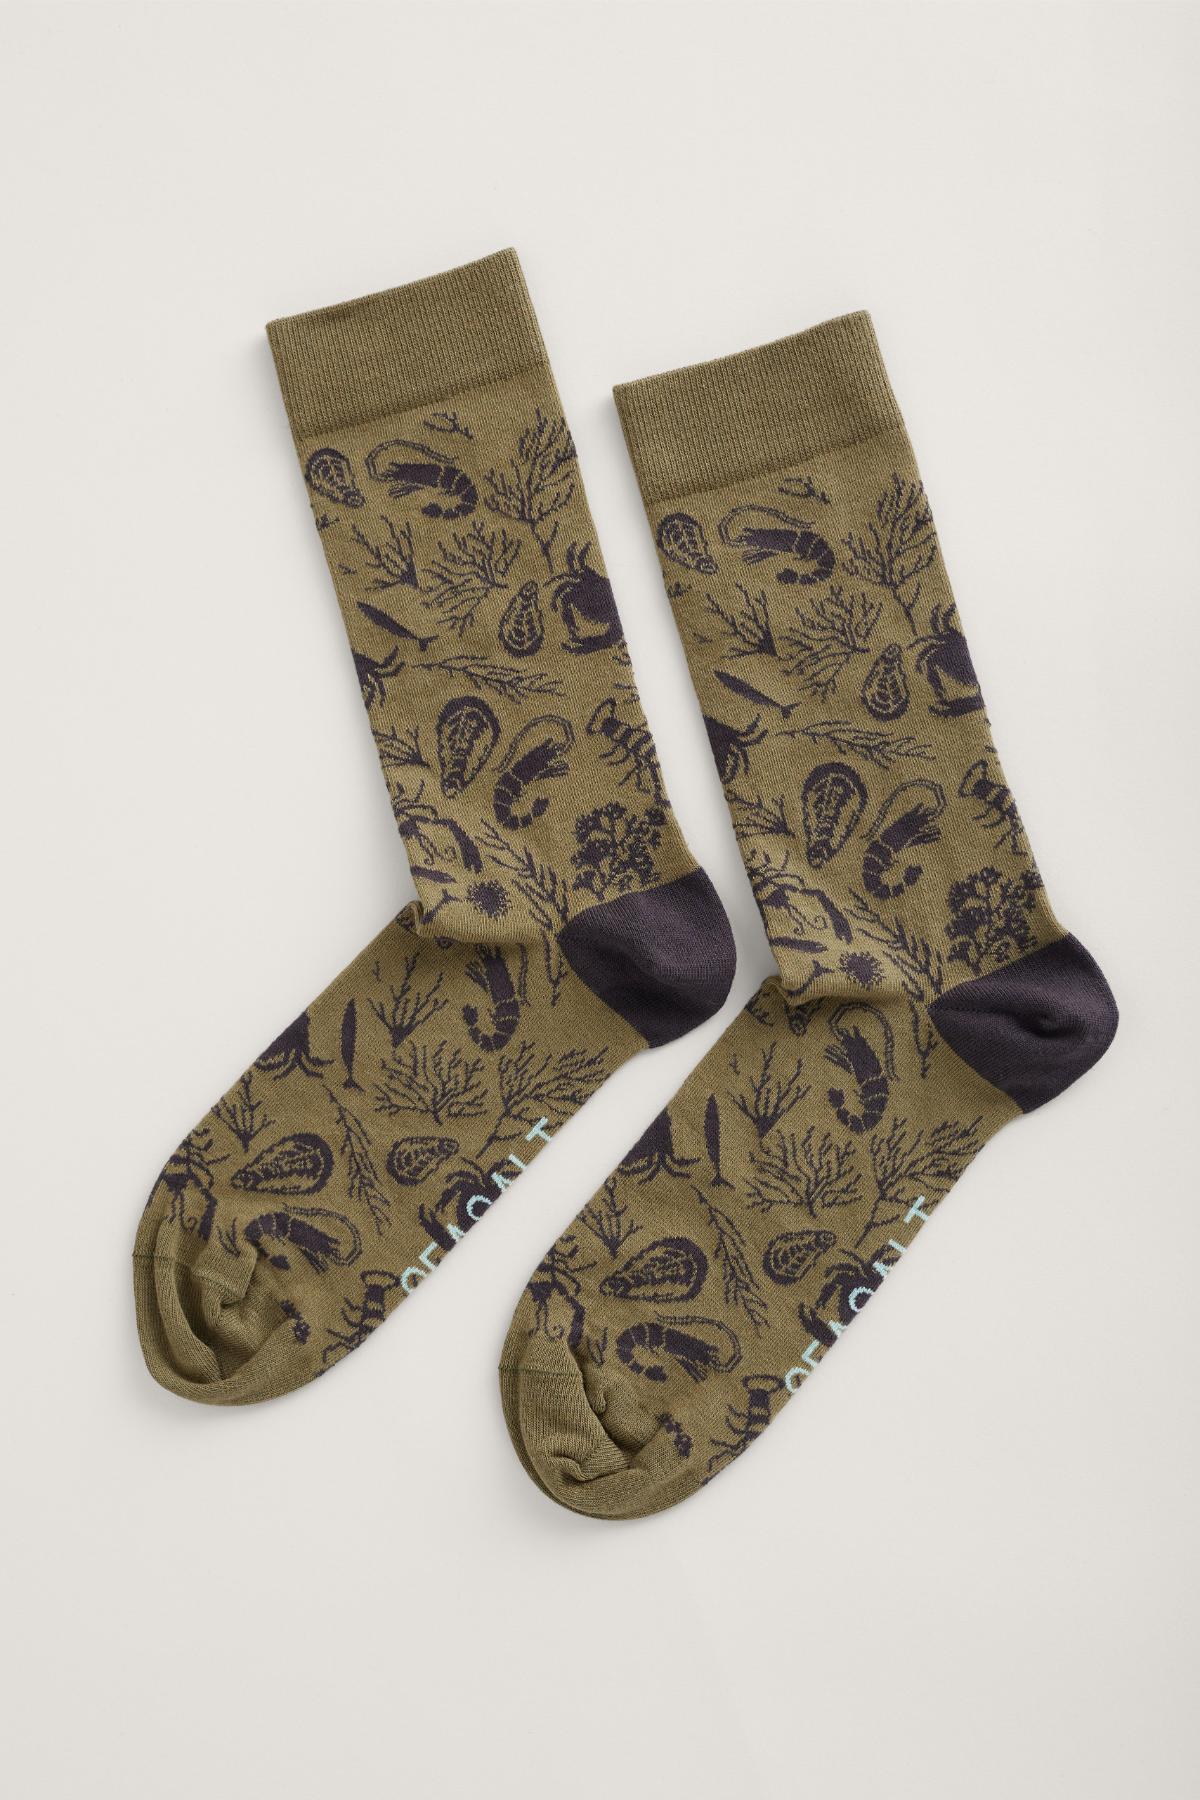 Seasalt Men's Arty Socks